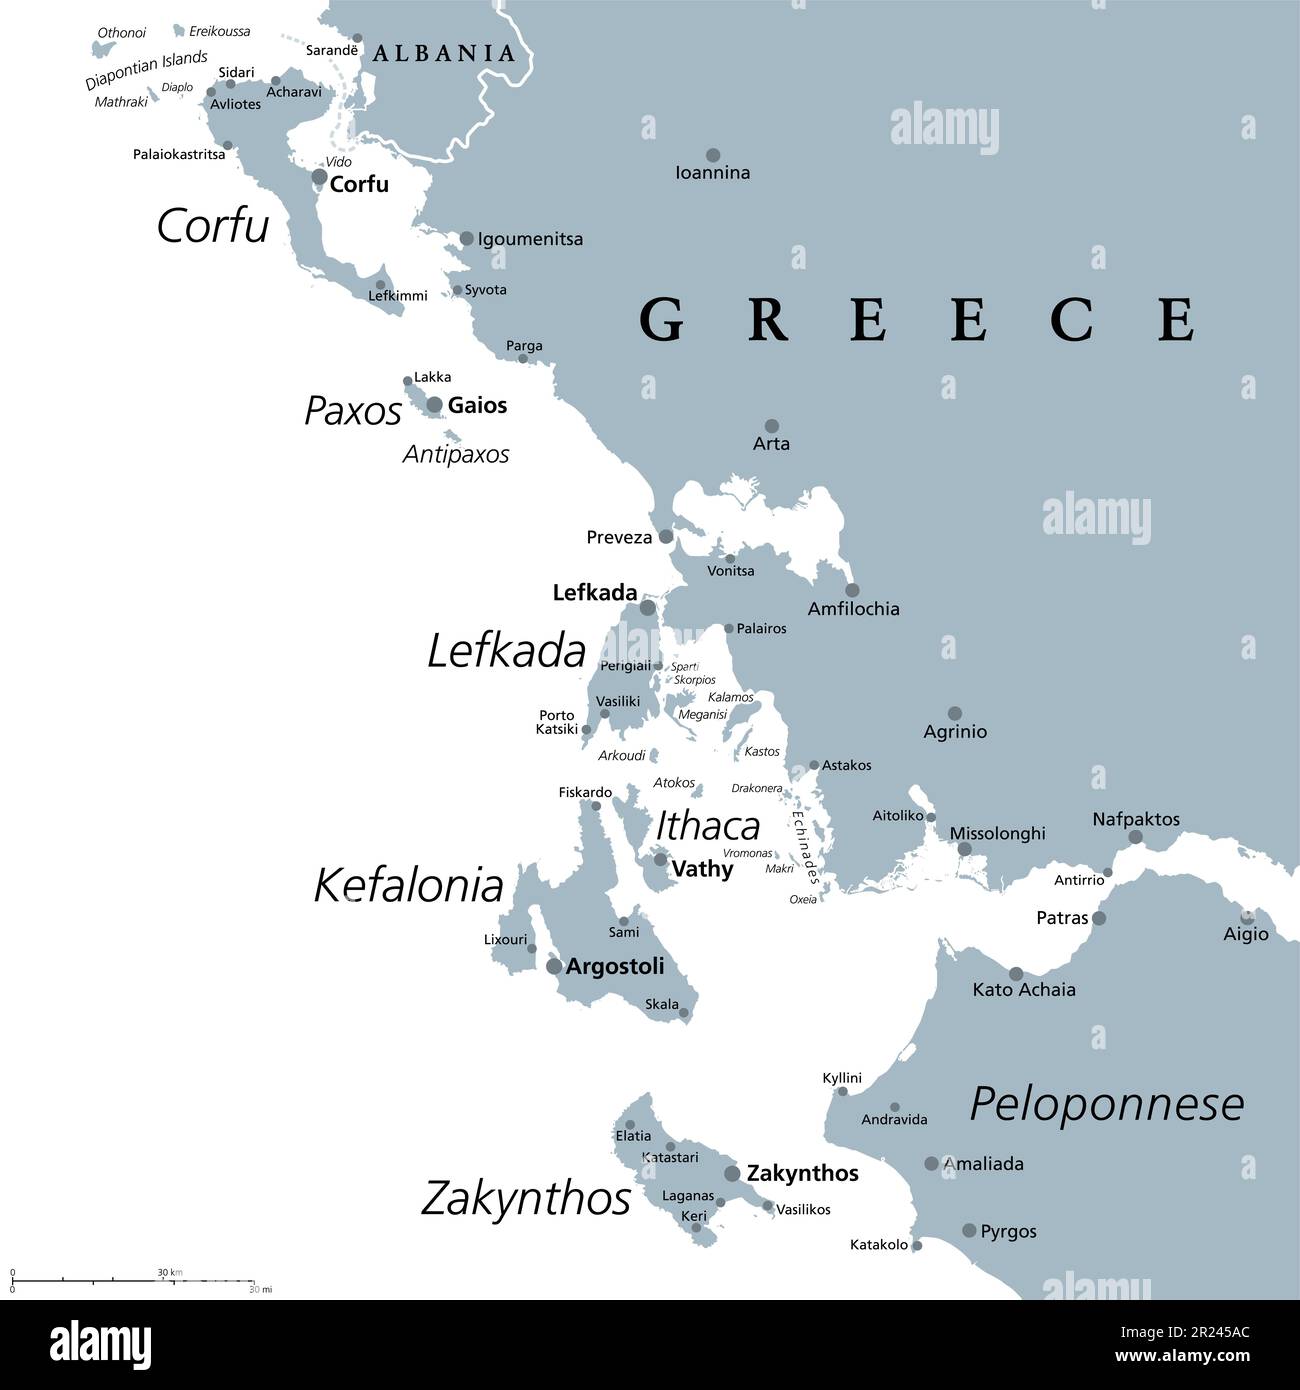 Ionian Islands Region of Greece, gray political map. Greek island group, Ionian Sea. Corfu, Paxos, Antipaxos, Lefkada, Kefalonia, Ithaca,  Zakynthos. Stock Photo